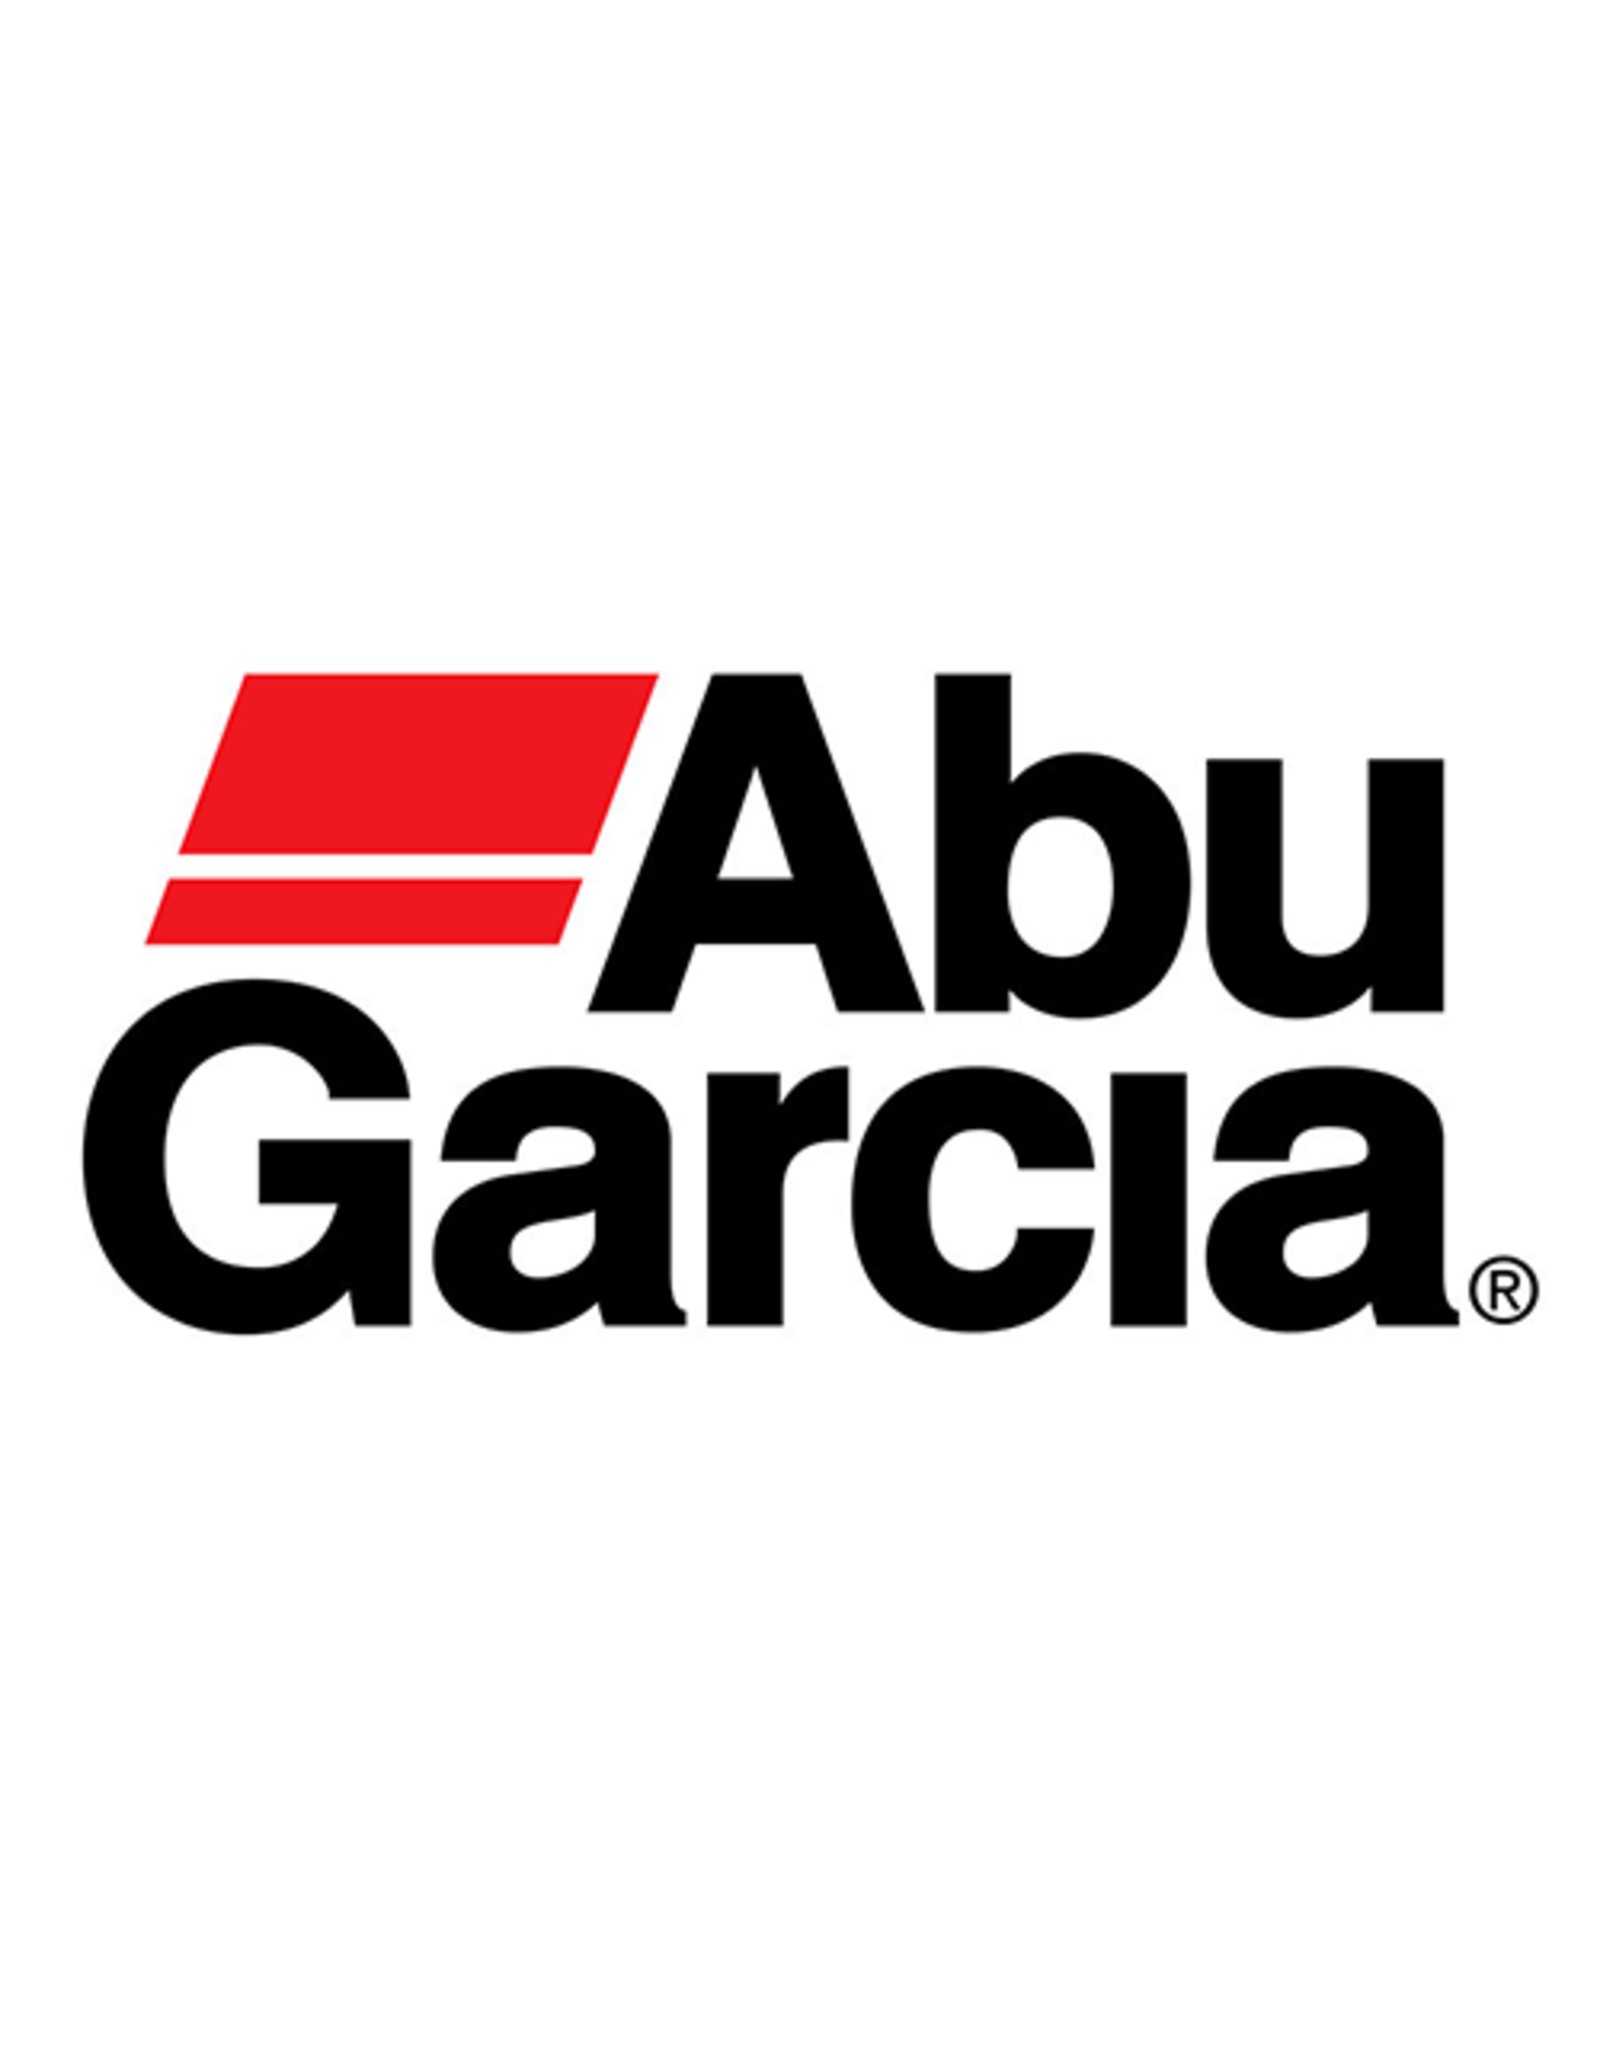 Abu Garcia 975366  CARRIAGE SCREW